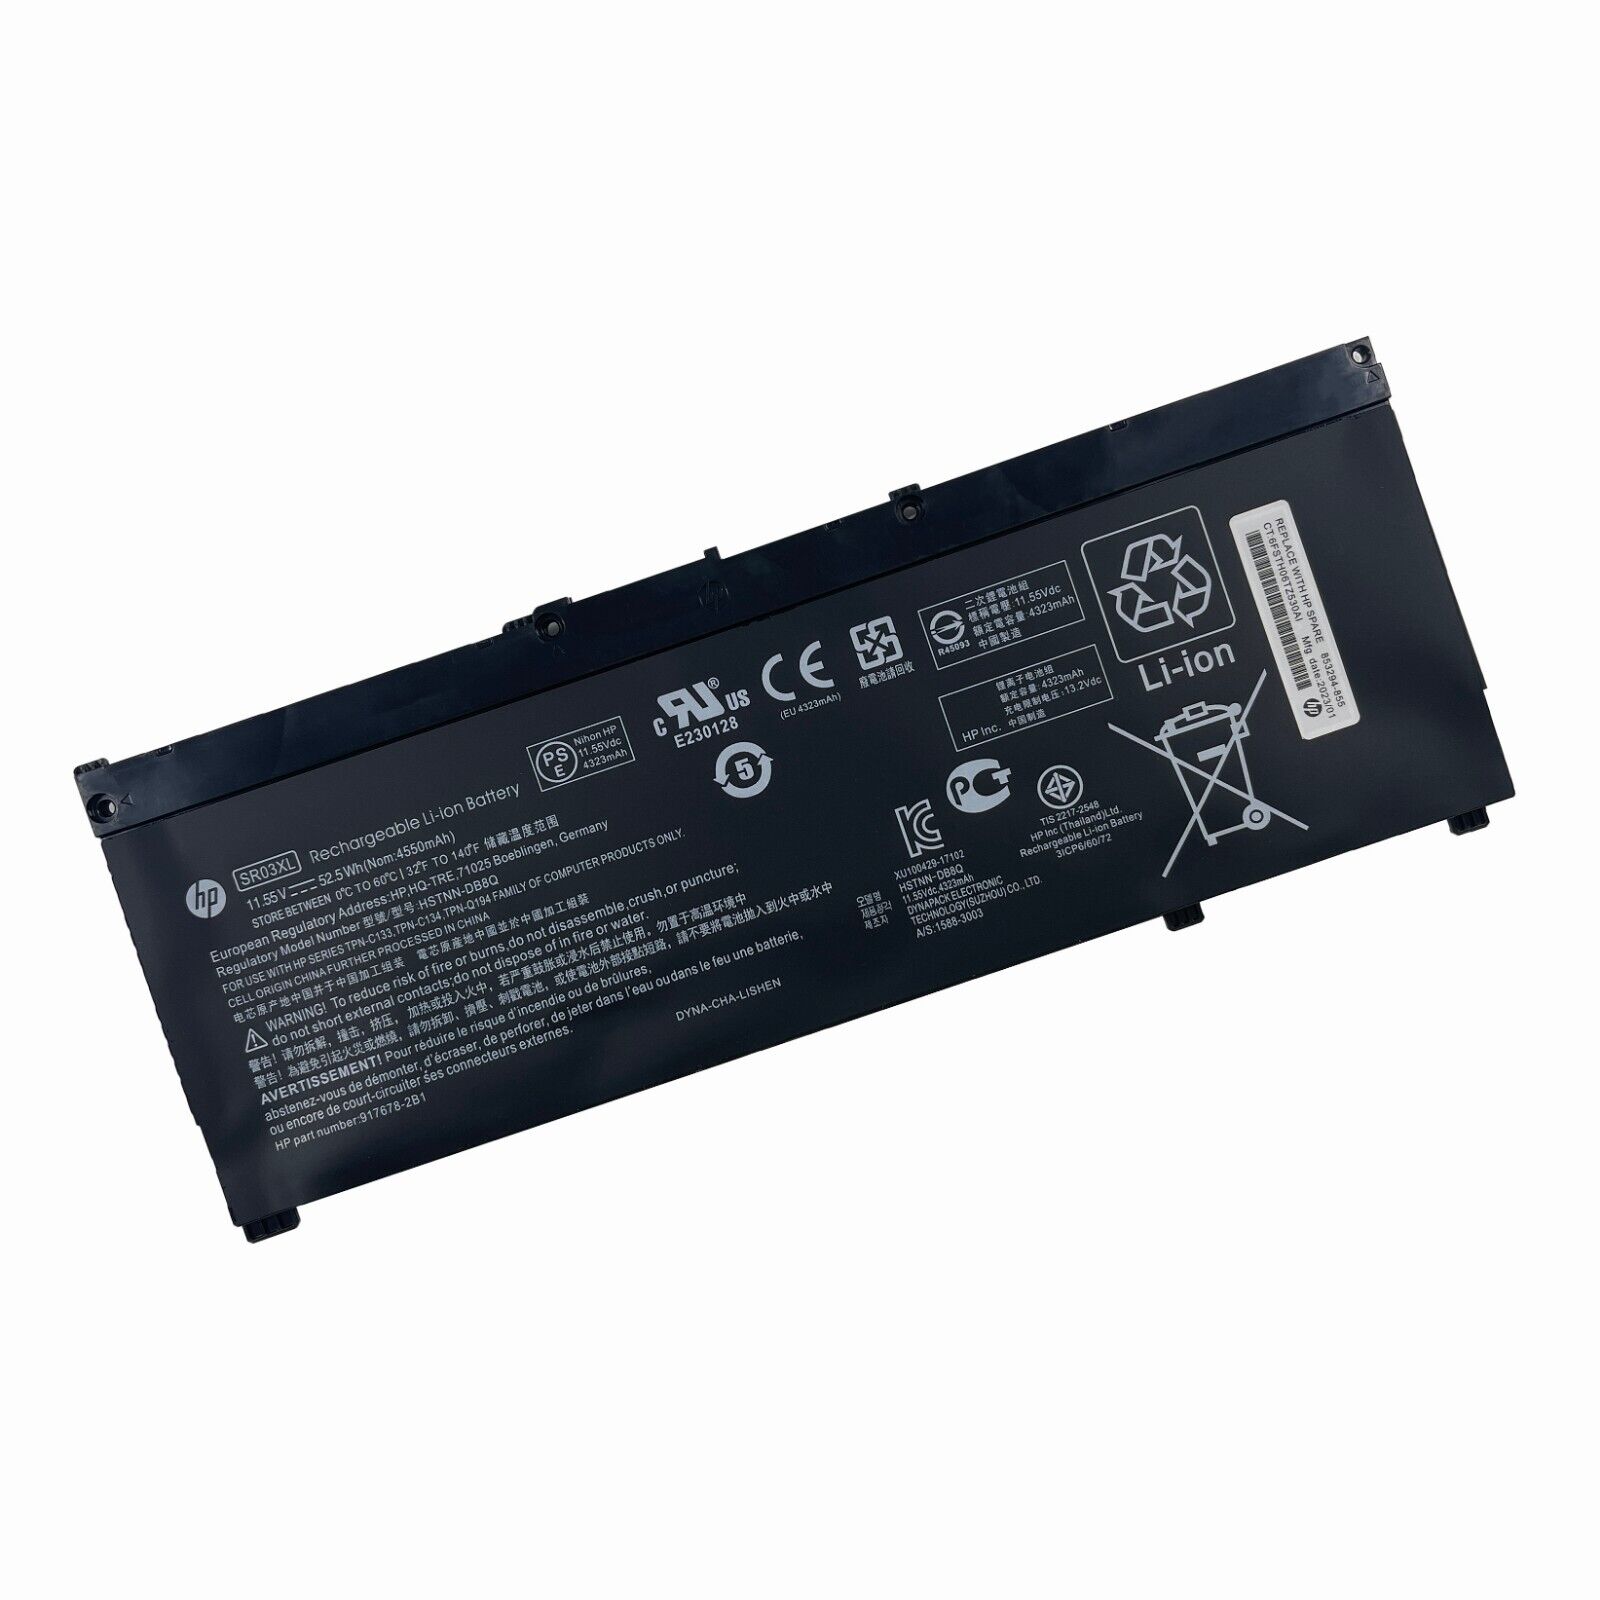 NEW OEM 52.5WH SR03XL Battery for HP Pavilion 15-CX Envy x360 15-CN 15-CP 17-BW